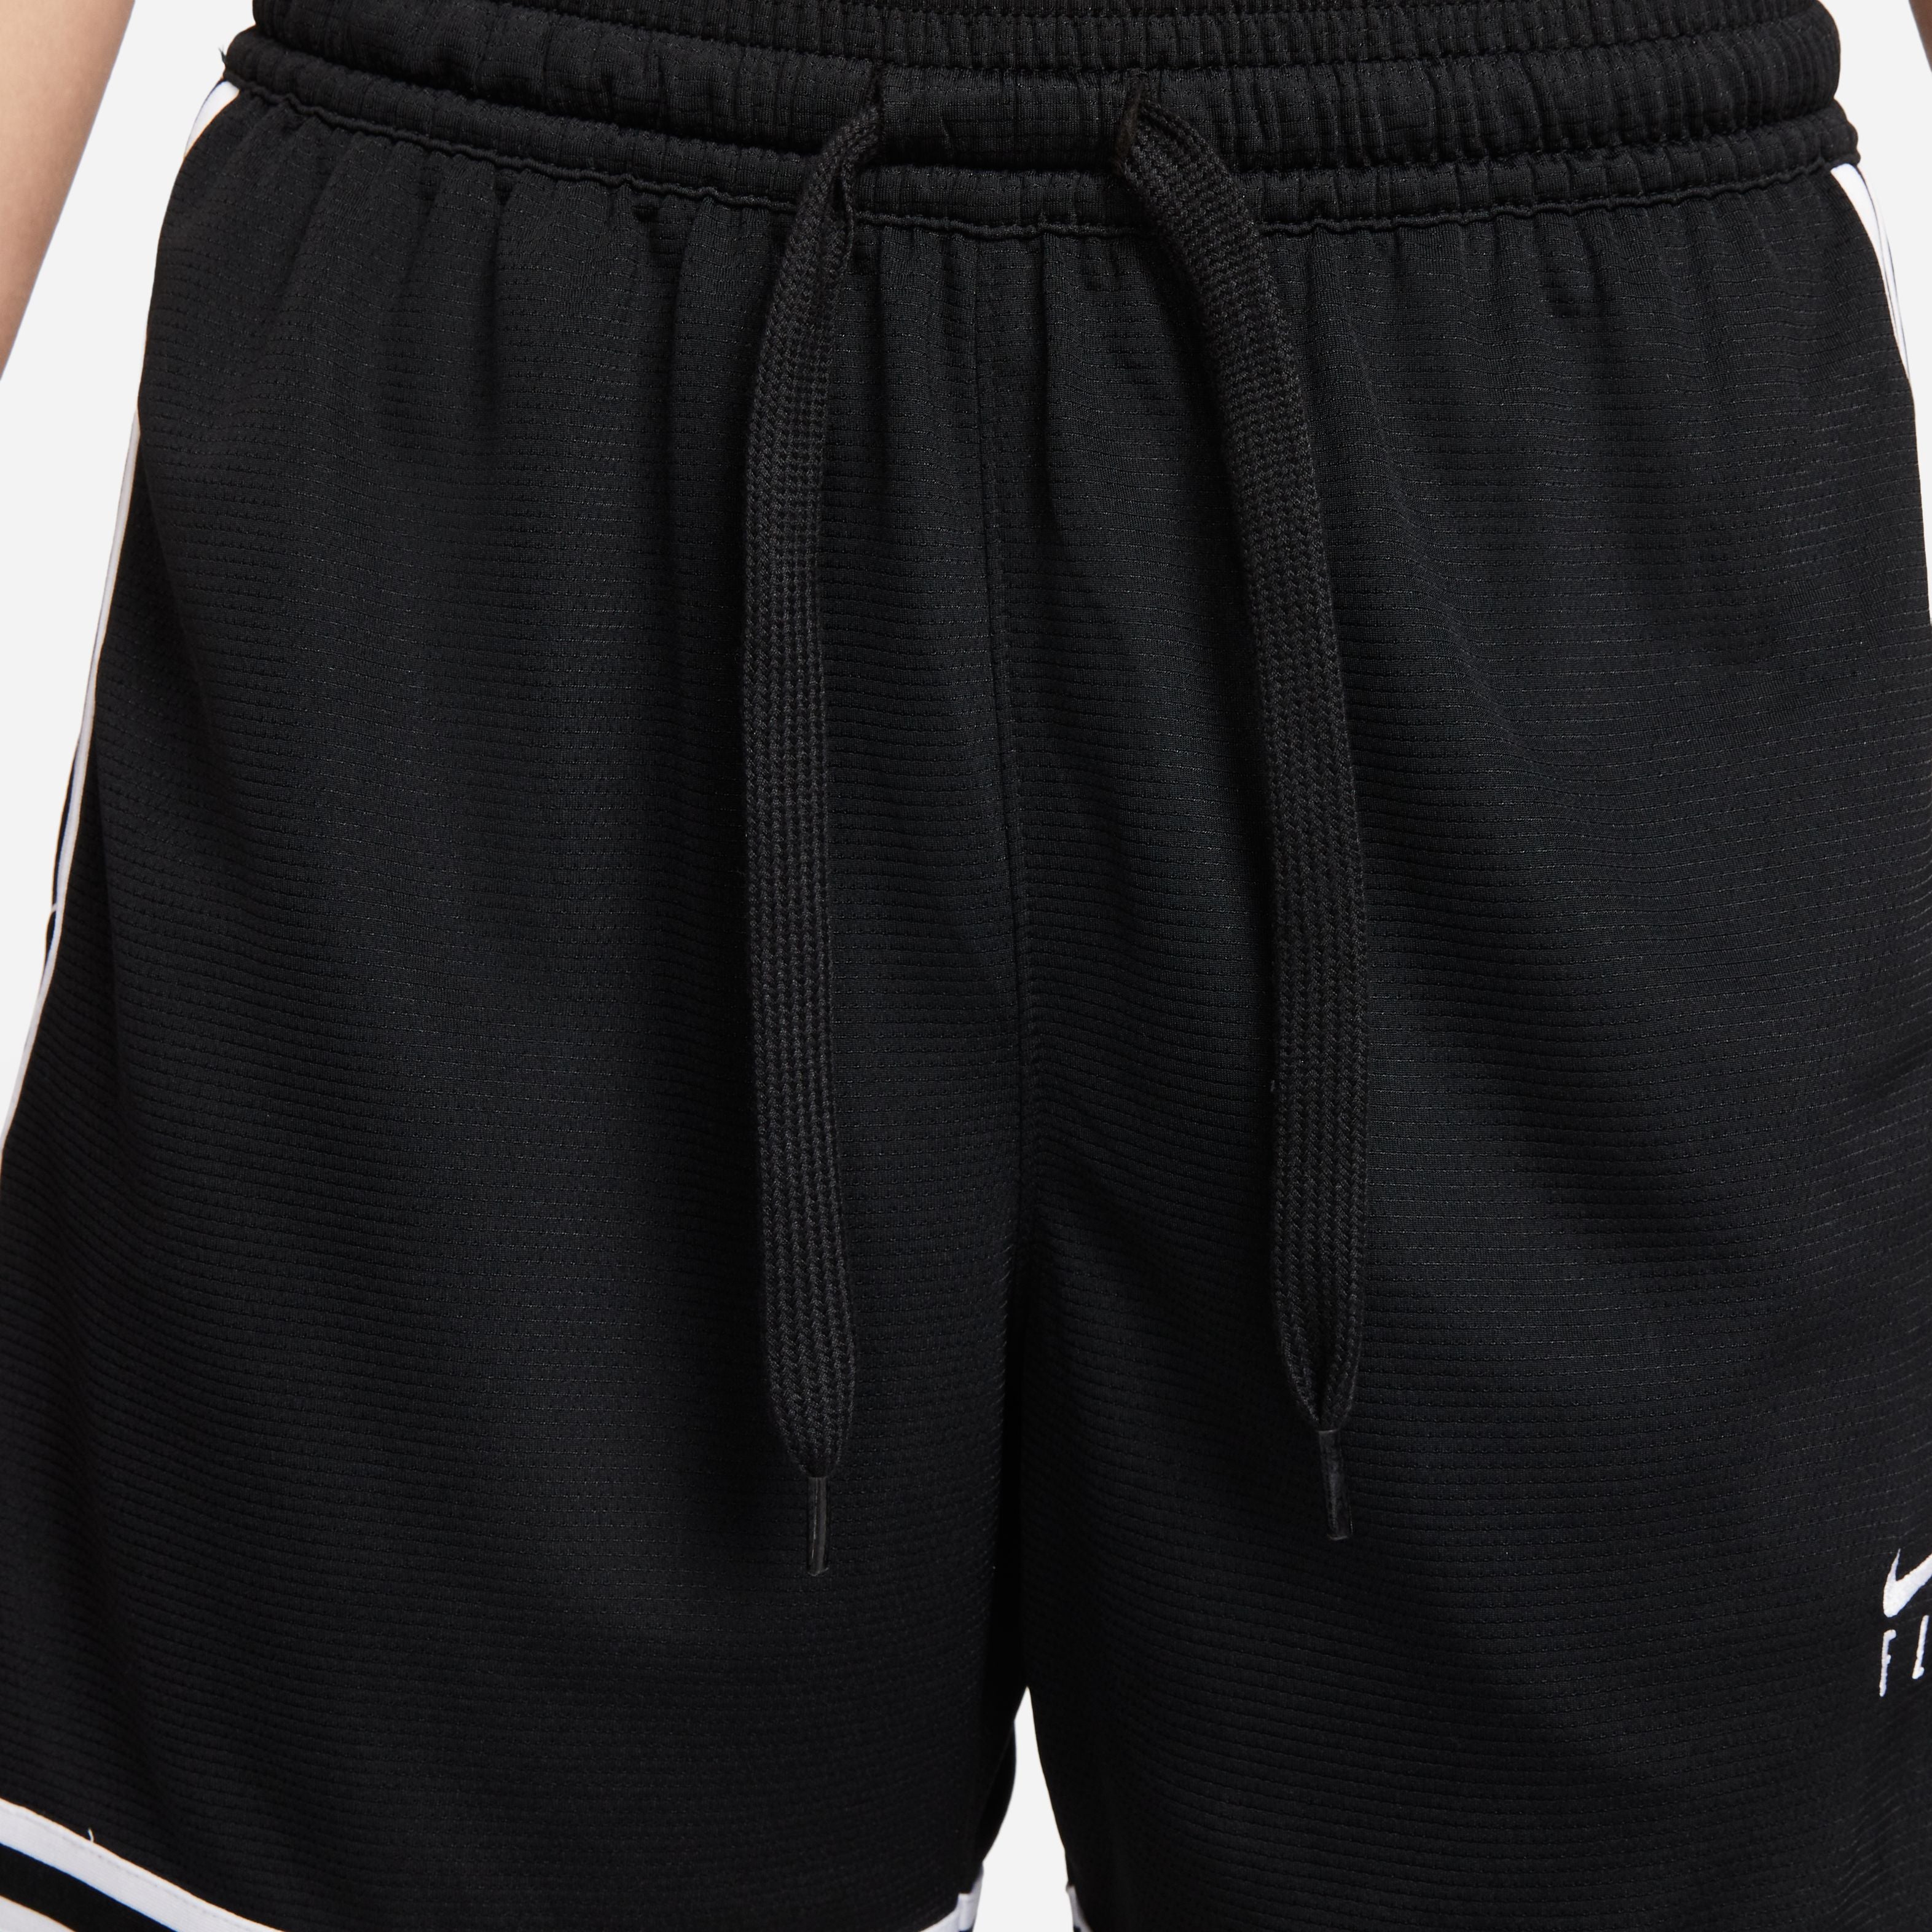 Fly Crossover Basketball Shorts - Black/White